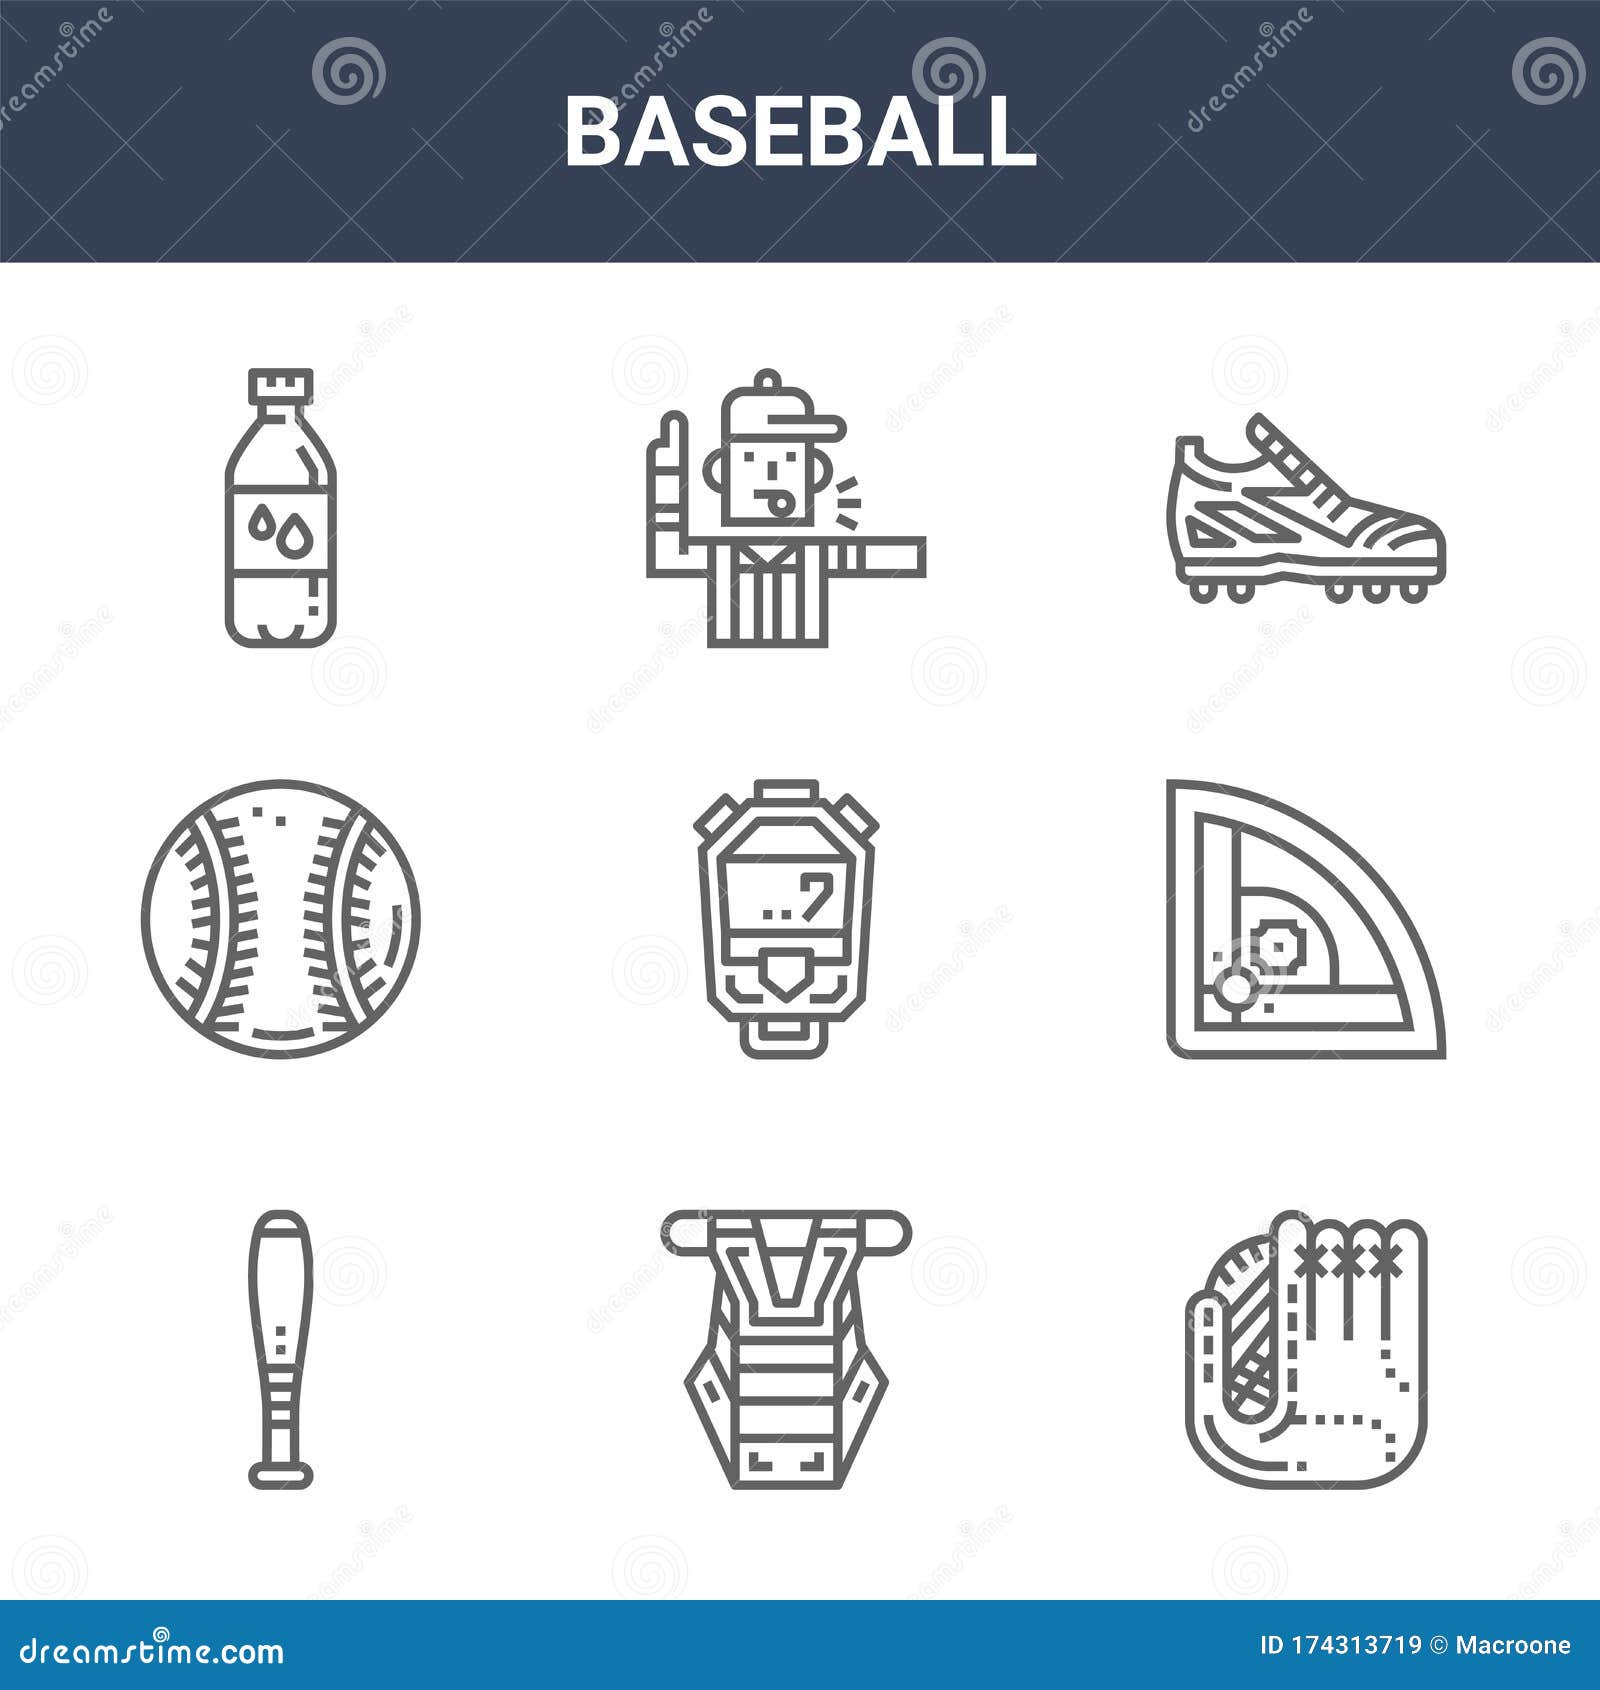 Baseball Catcher Torso Icon - Download in Line Style